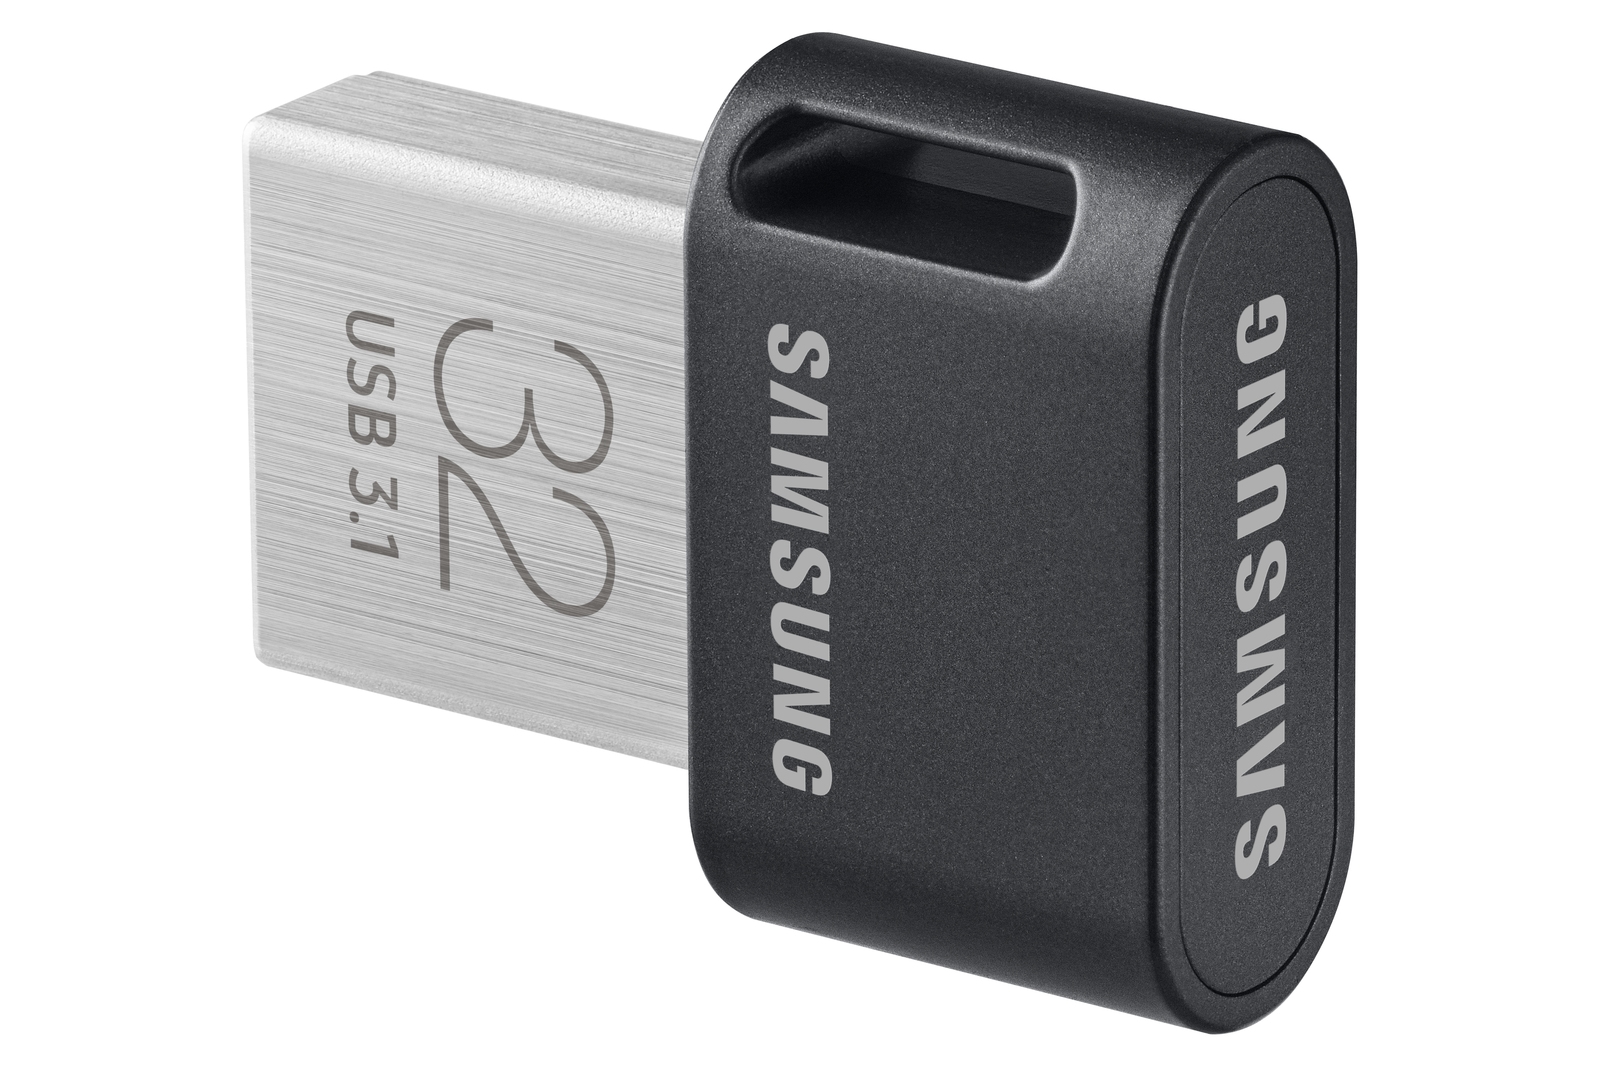 Samsung Memory MUF-32BAEU CLE USB SAMSUNG 32G BAR USB 3.0 : :  Informatique